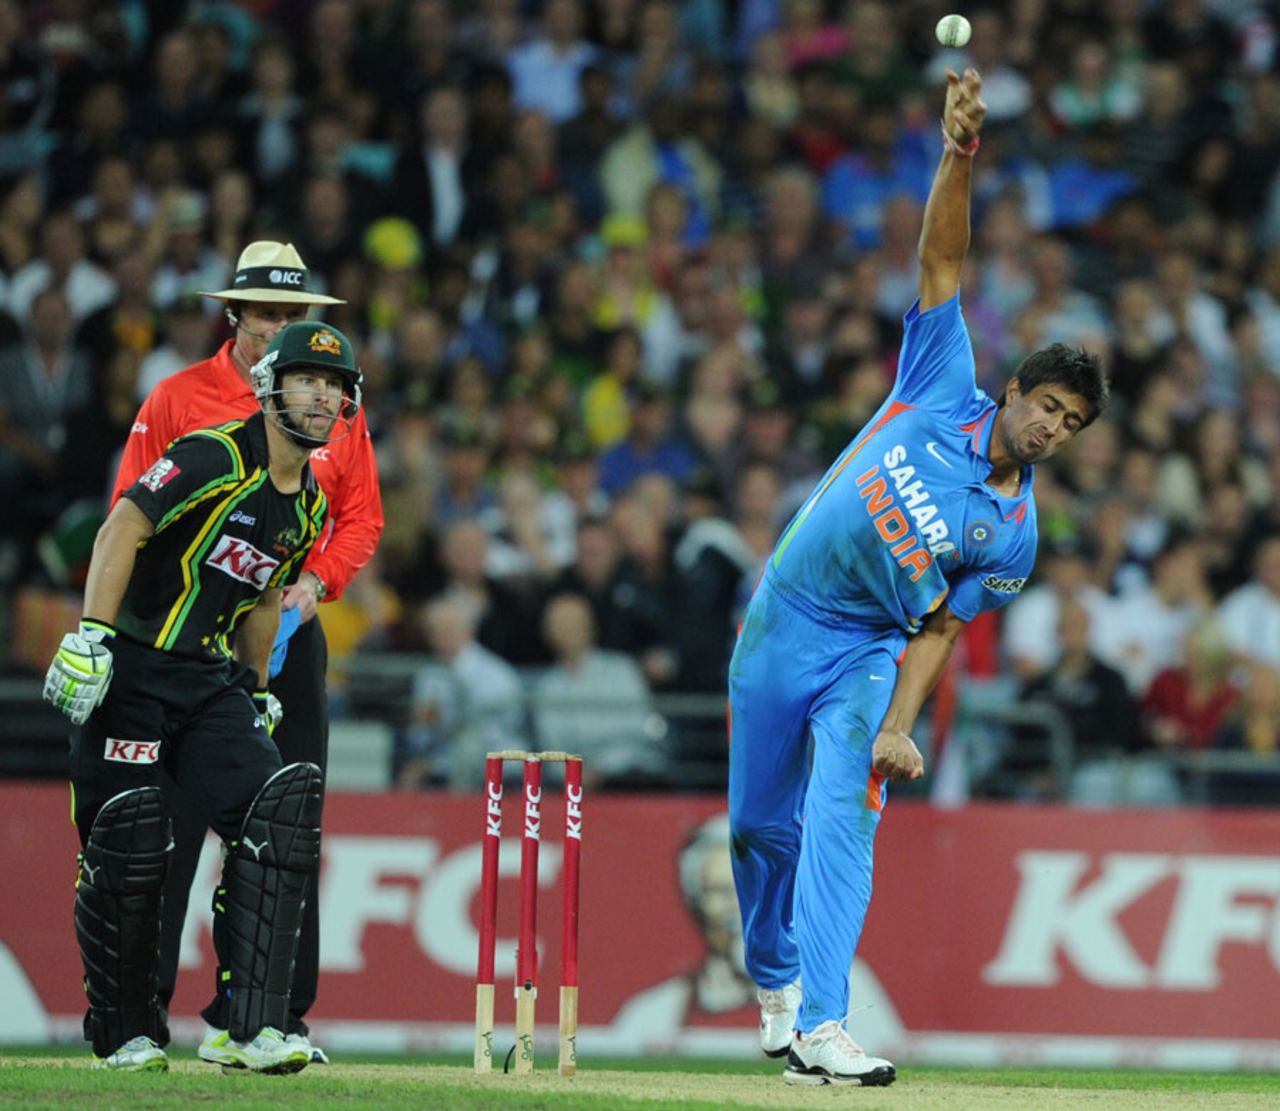 Rahul Sharma releases the ball, Australia v India, 1st Twenty20, Stadium Australia, Sydney, February 1, 2012